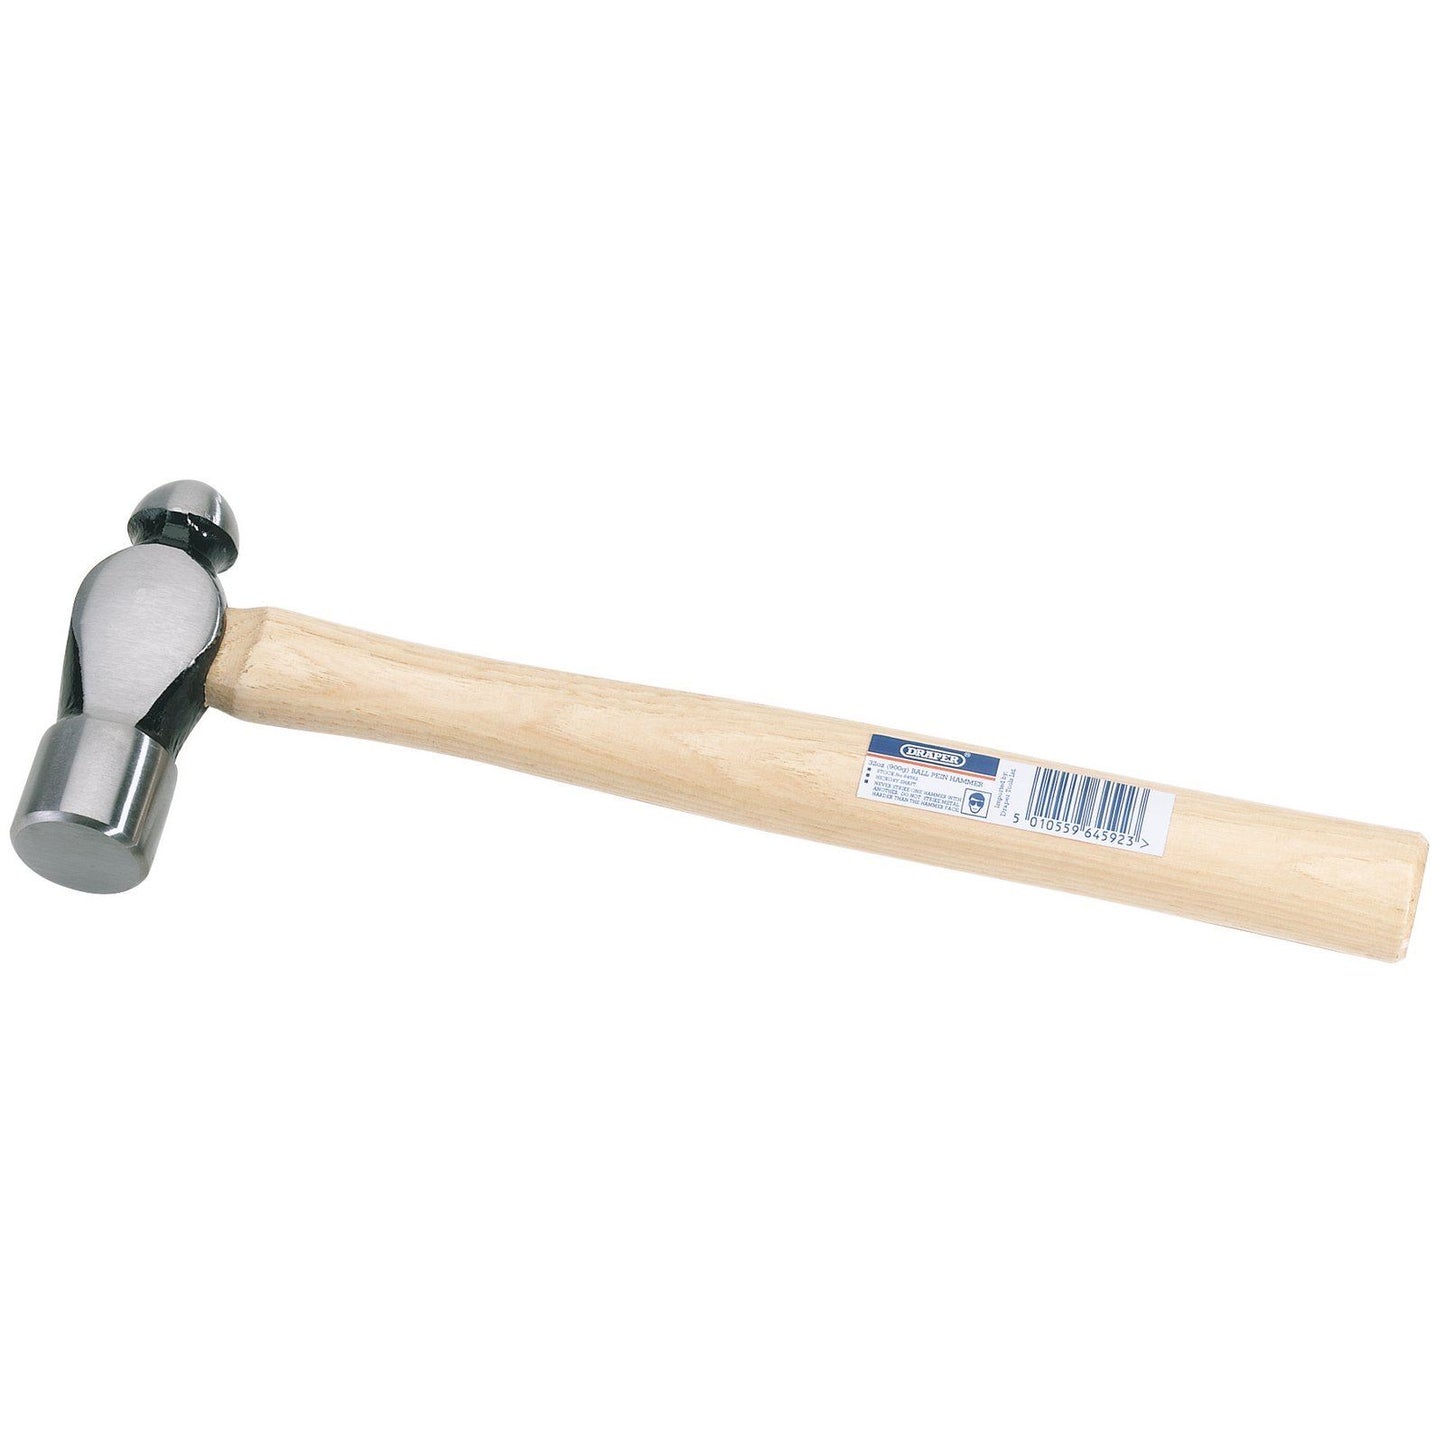 Draper 1x 900G (32oz) Ball Pein Hammer Garage Professional Standard Tool 64592